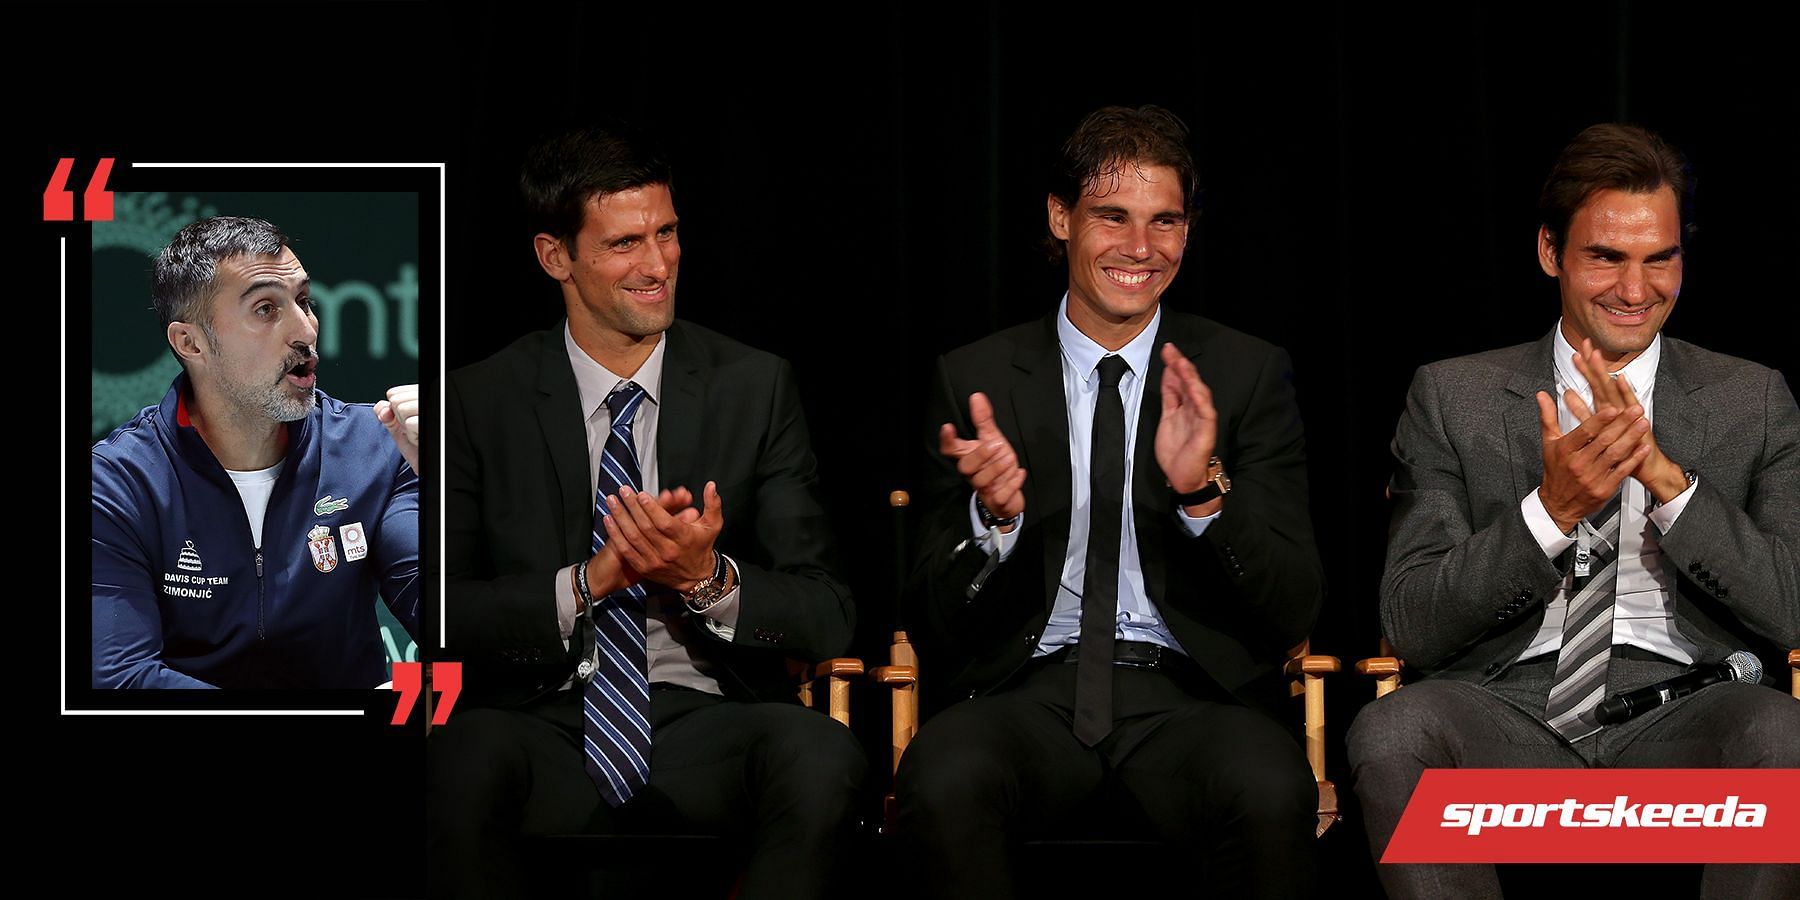 Nenad Zimojic has hailed the Big Three of Roger Federer, Rafael Nadal and Novak Djokovic